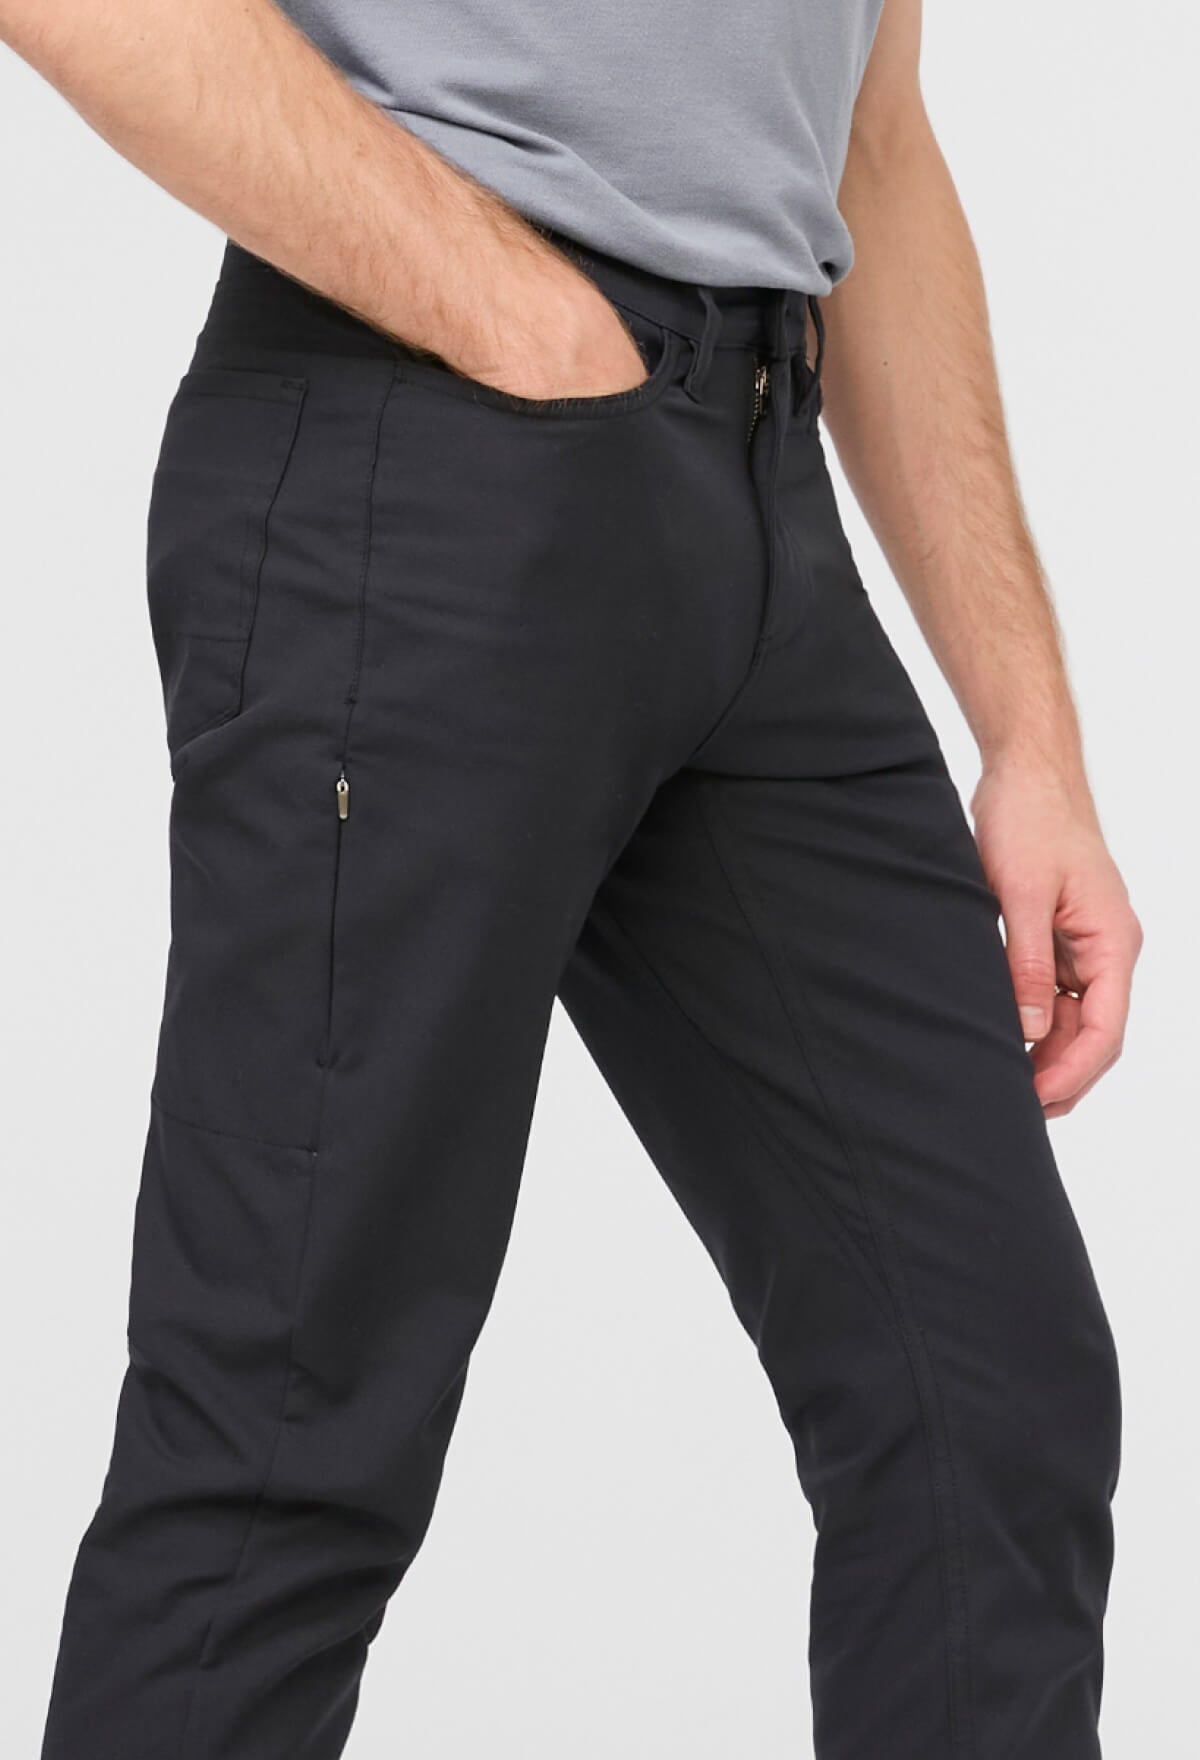 Essentials Men's Slim-Fit 5-Pocket Stretch Twill Pant, Black, 28W x  28L : : Clothing, Shoes & Accessories